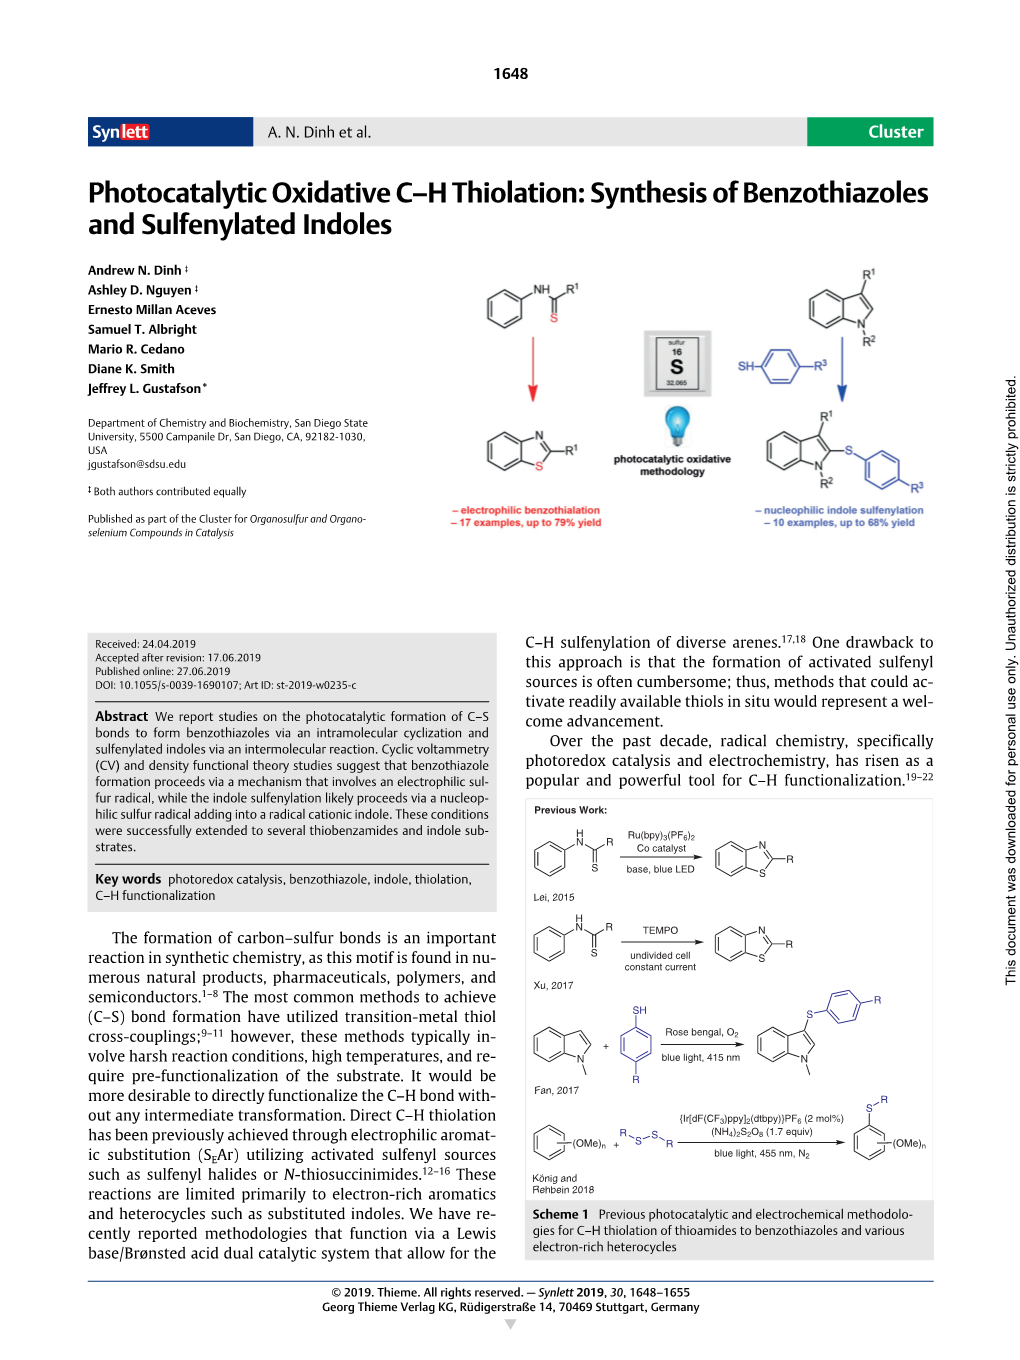 Synthesis of Benzothiazoles and Sulfenylated Indoles